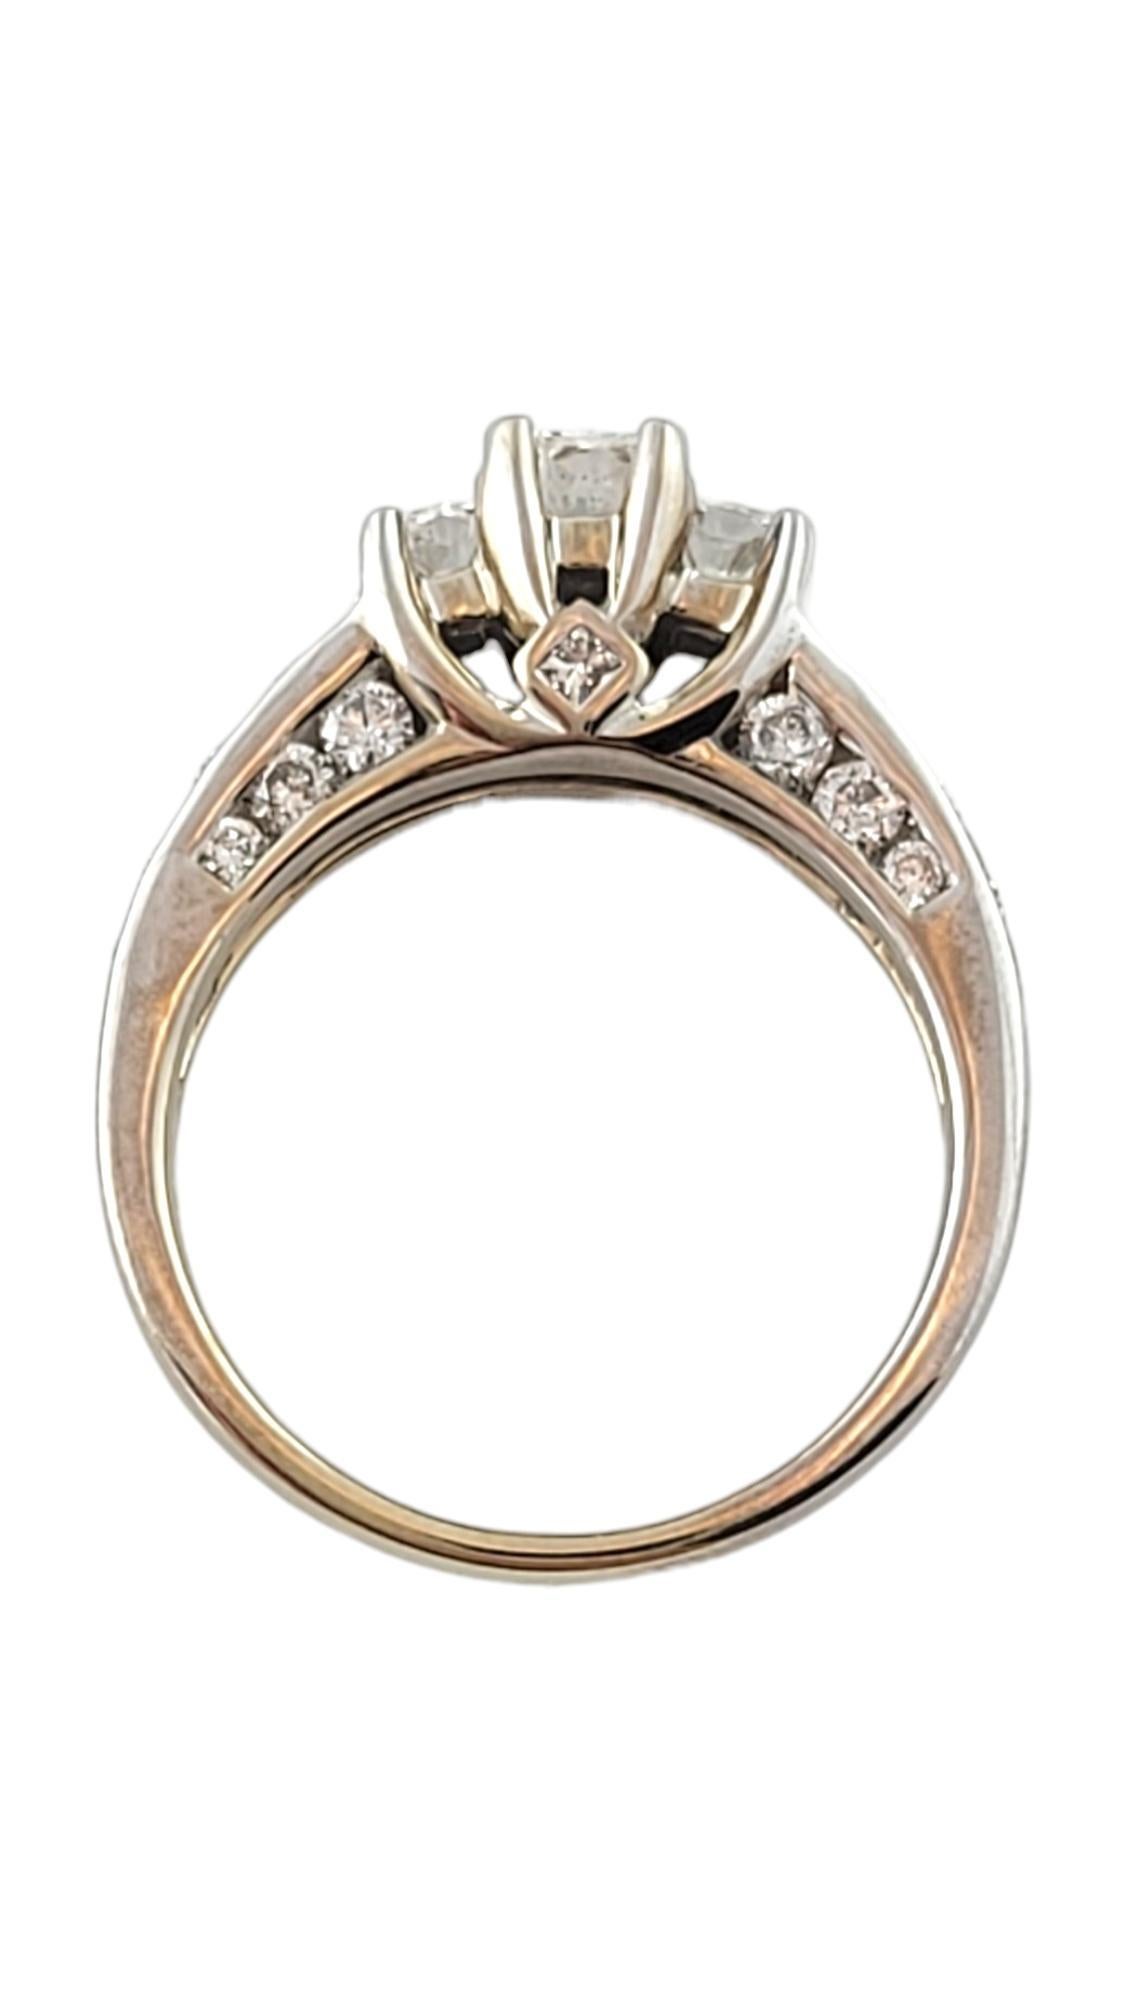 Princess Cut 14 Karat White Gold Diamond Engagement Ring Size 7 #16995 For Sale